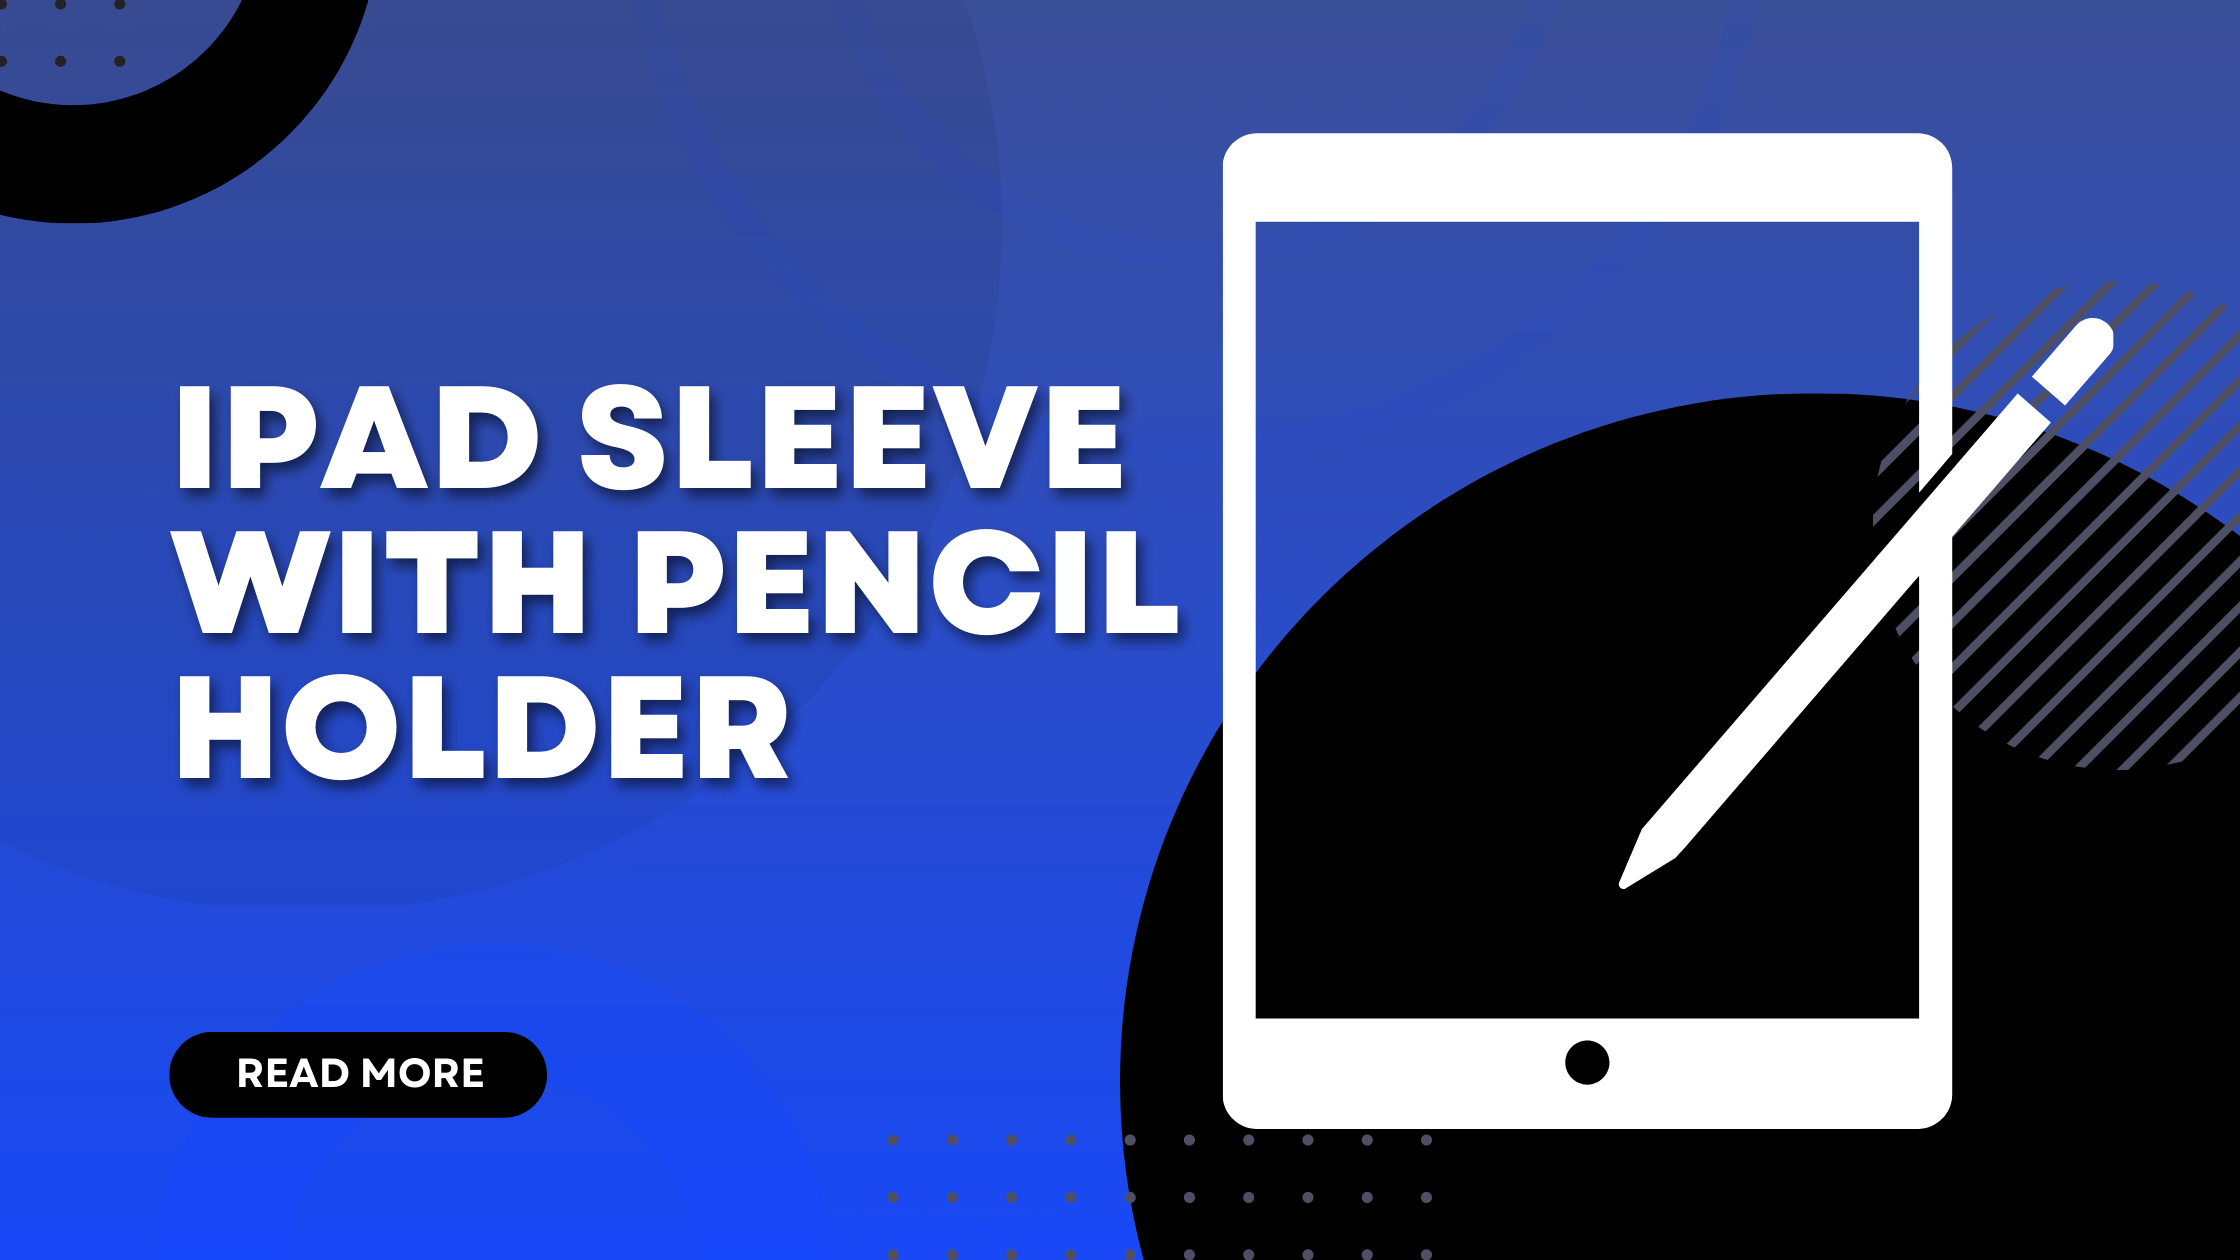 Ipad Sleeve With Pencil Holder